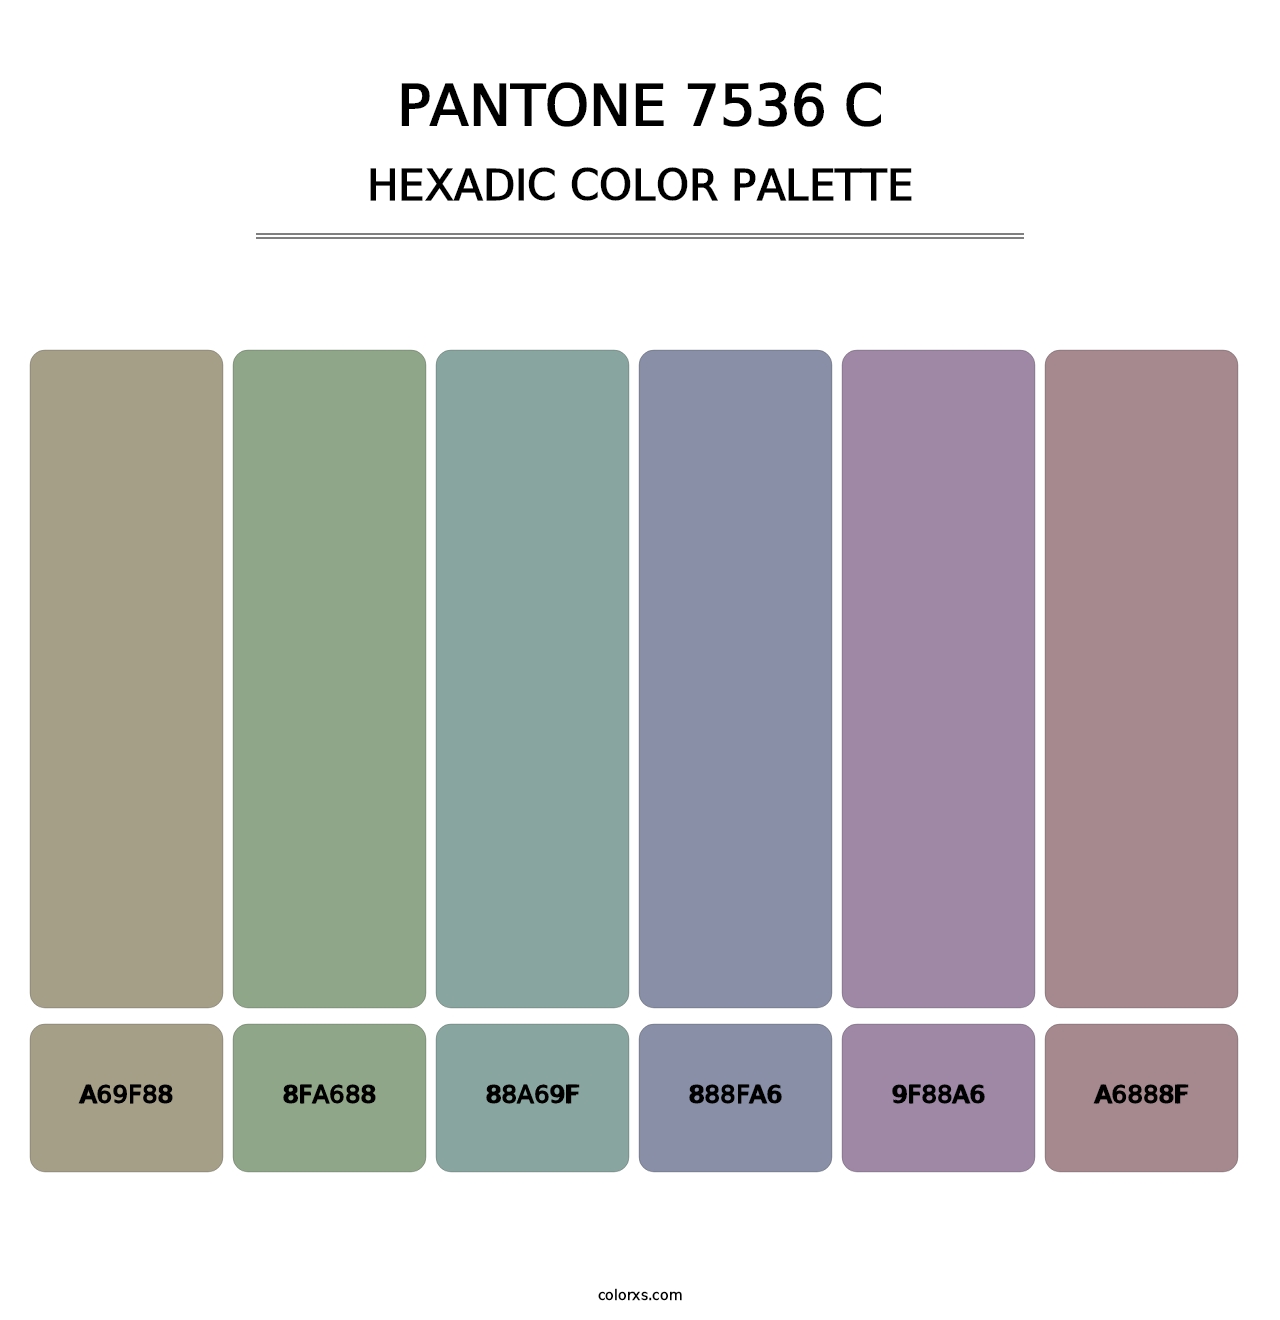 PANTONE 7536 C - Hexadic Color Palette